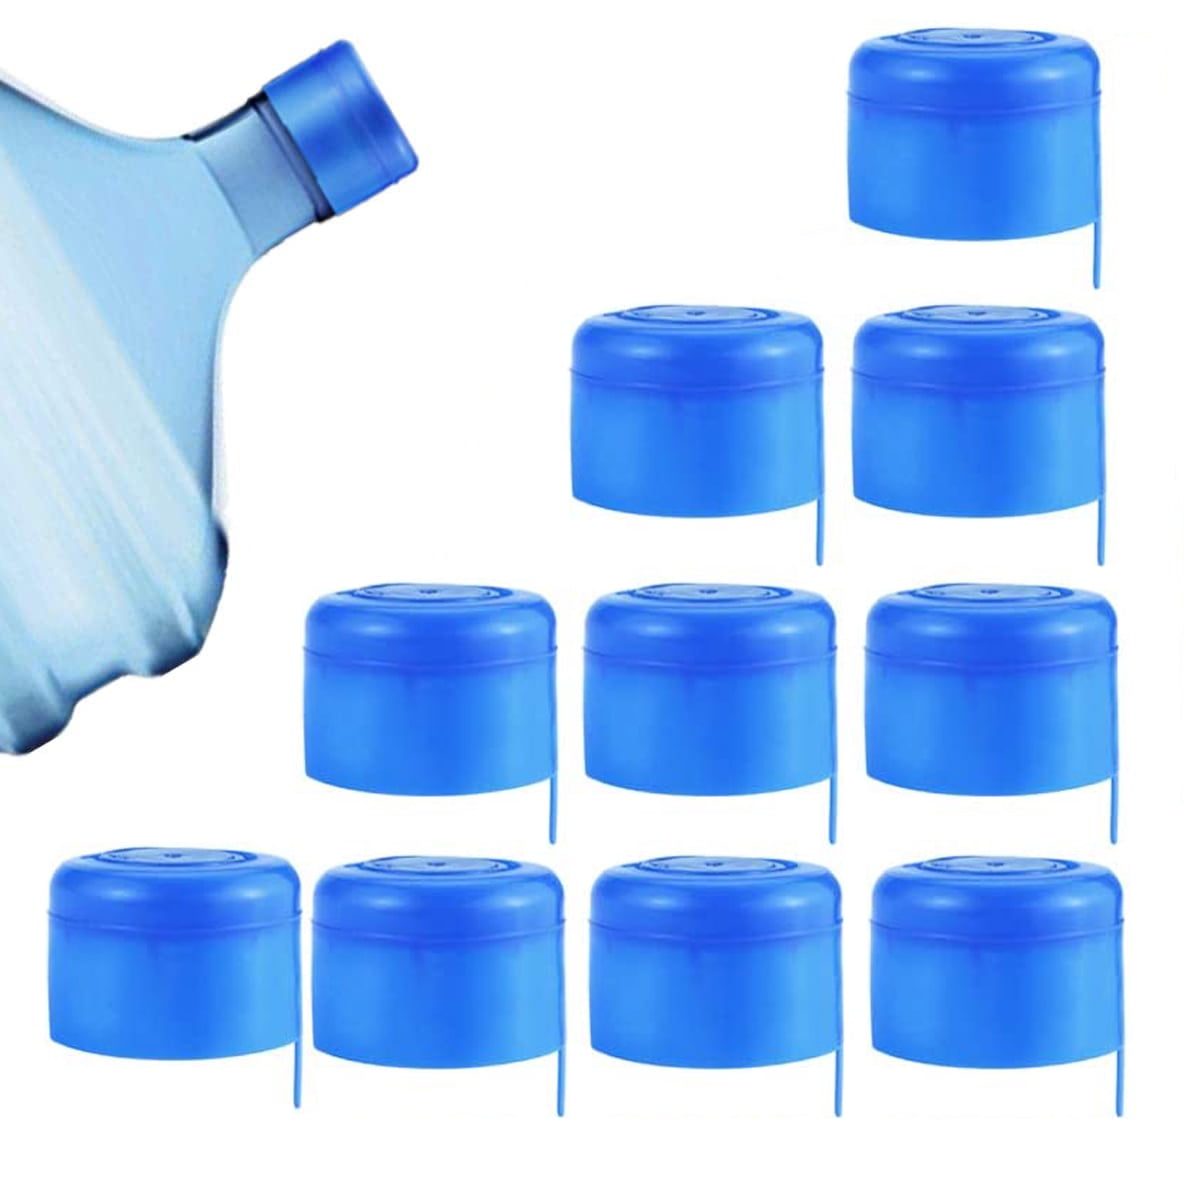 5 Gallon Cooler Bottle Cover for Standard Size Bottle Water Decor